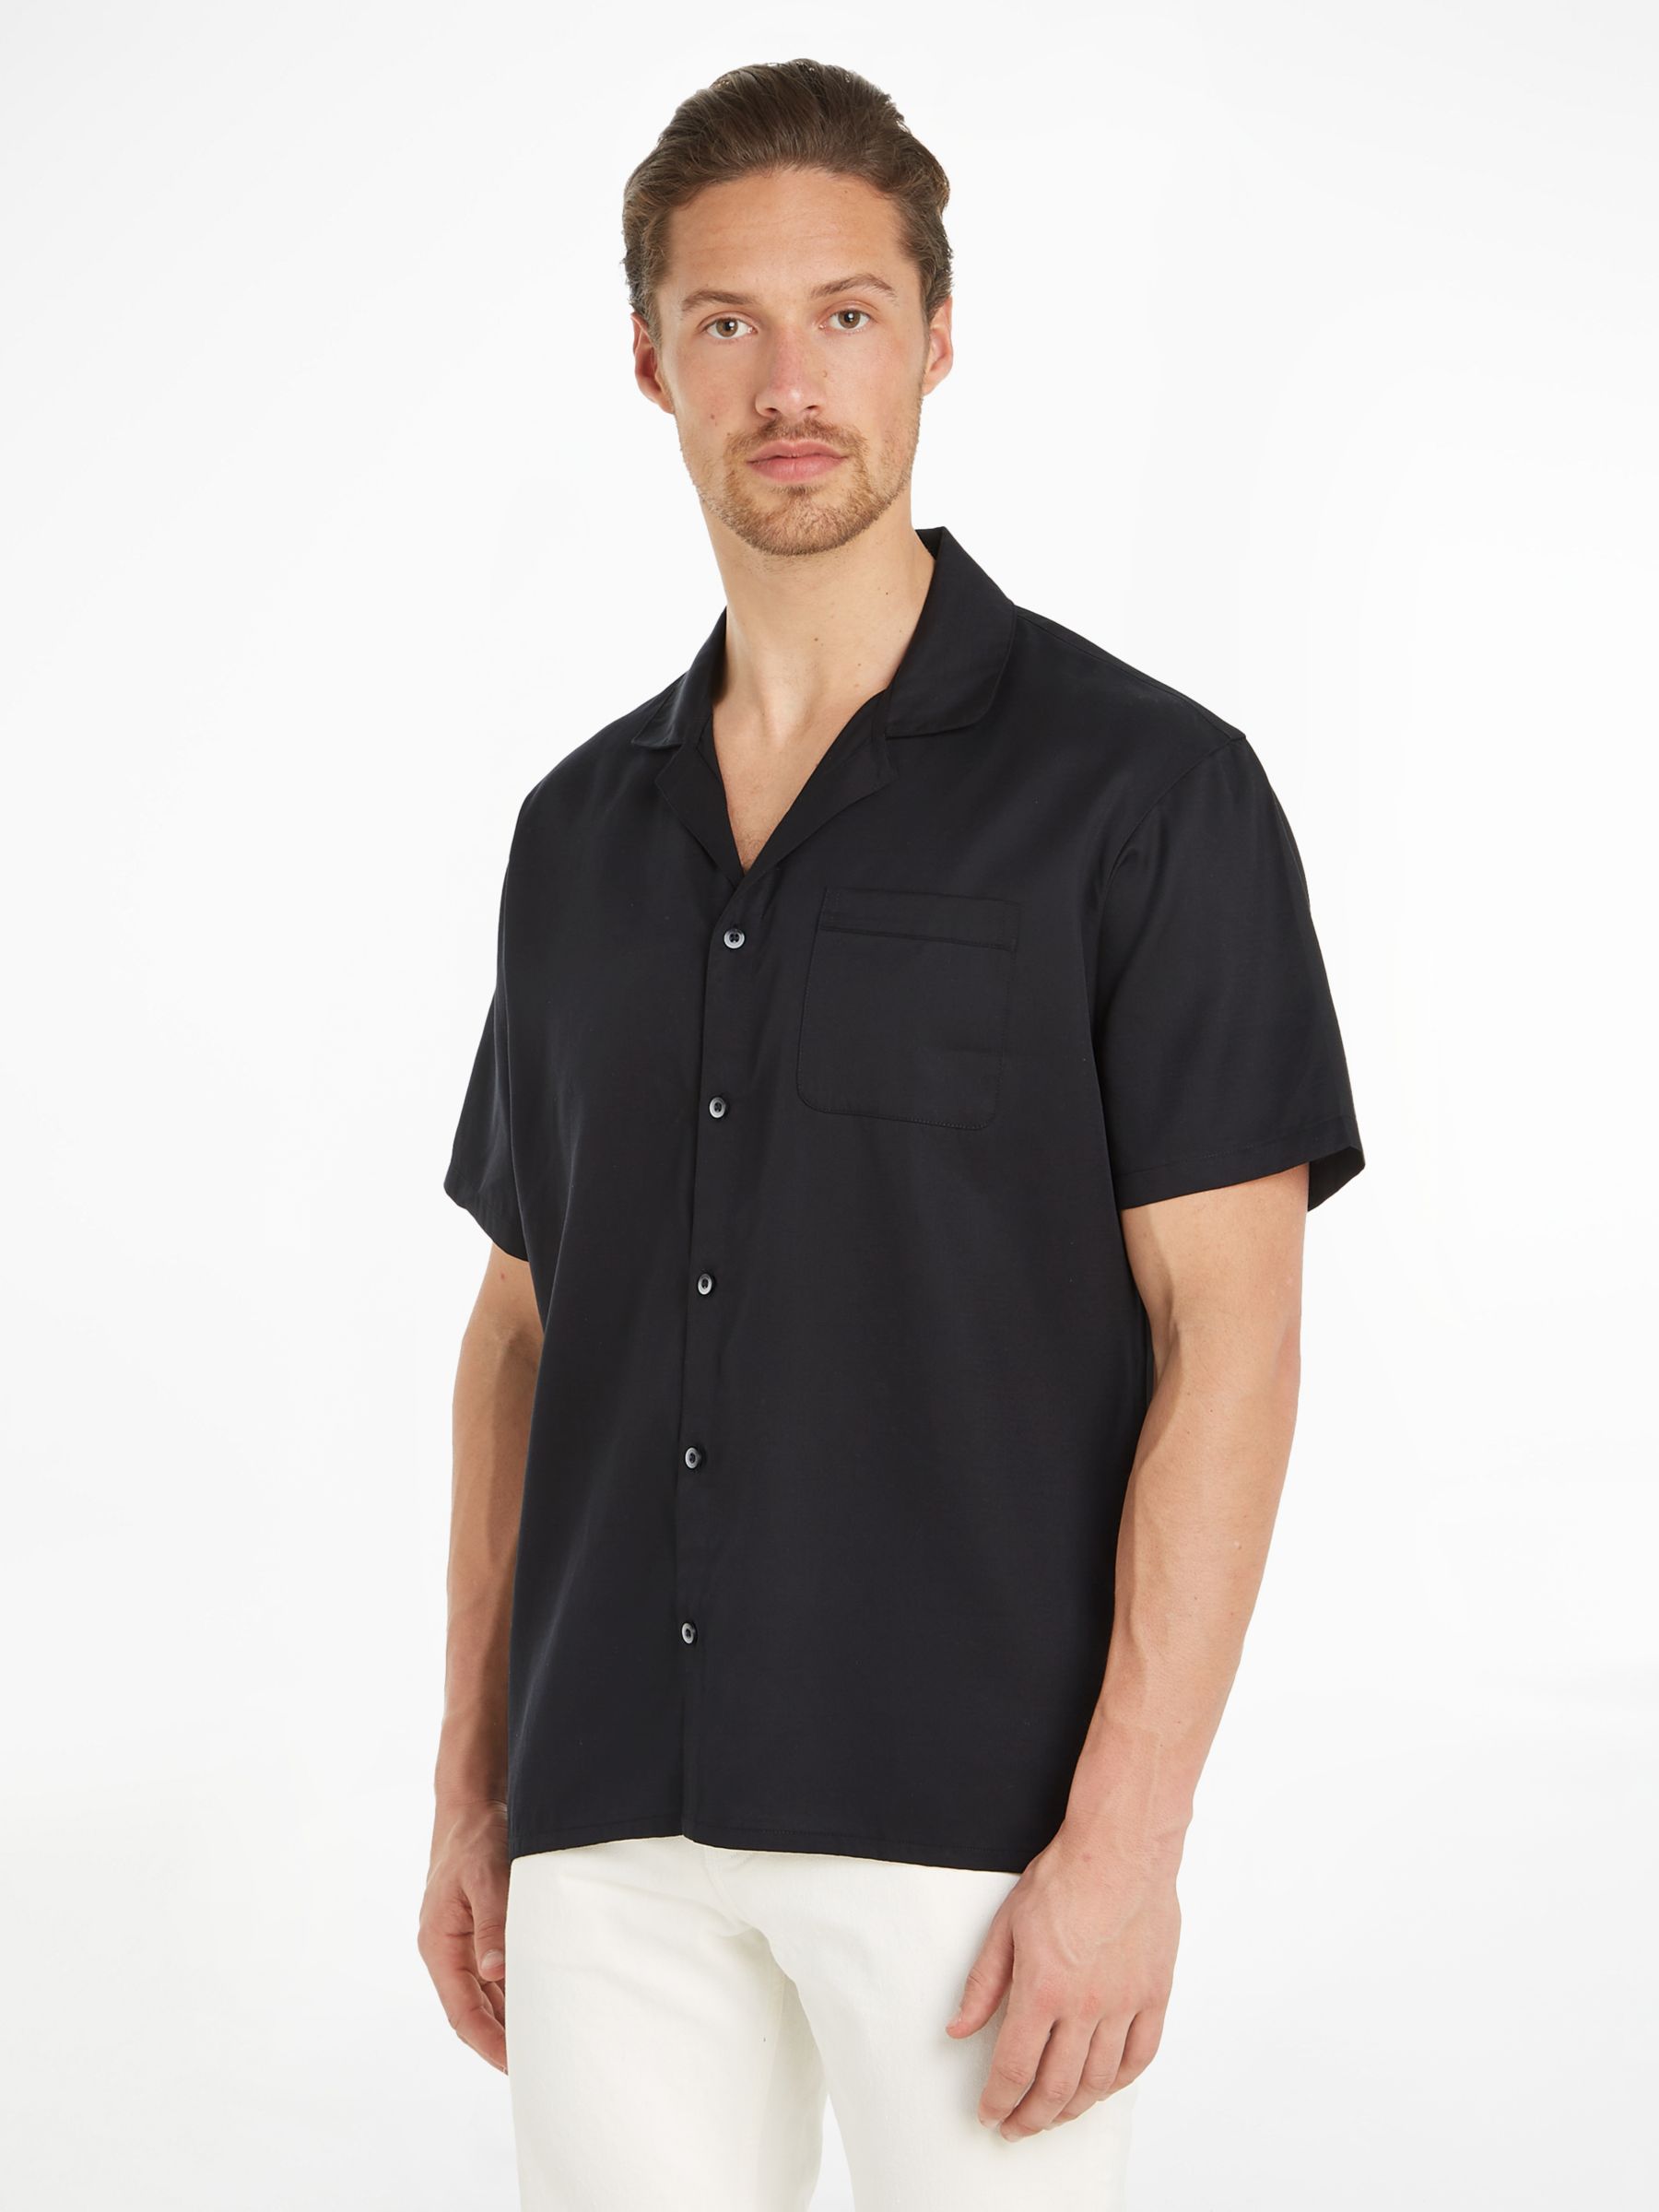 Calvin Klein Button Down Shirt, Black at John Lewis & Partners